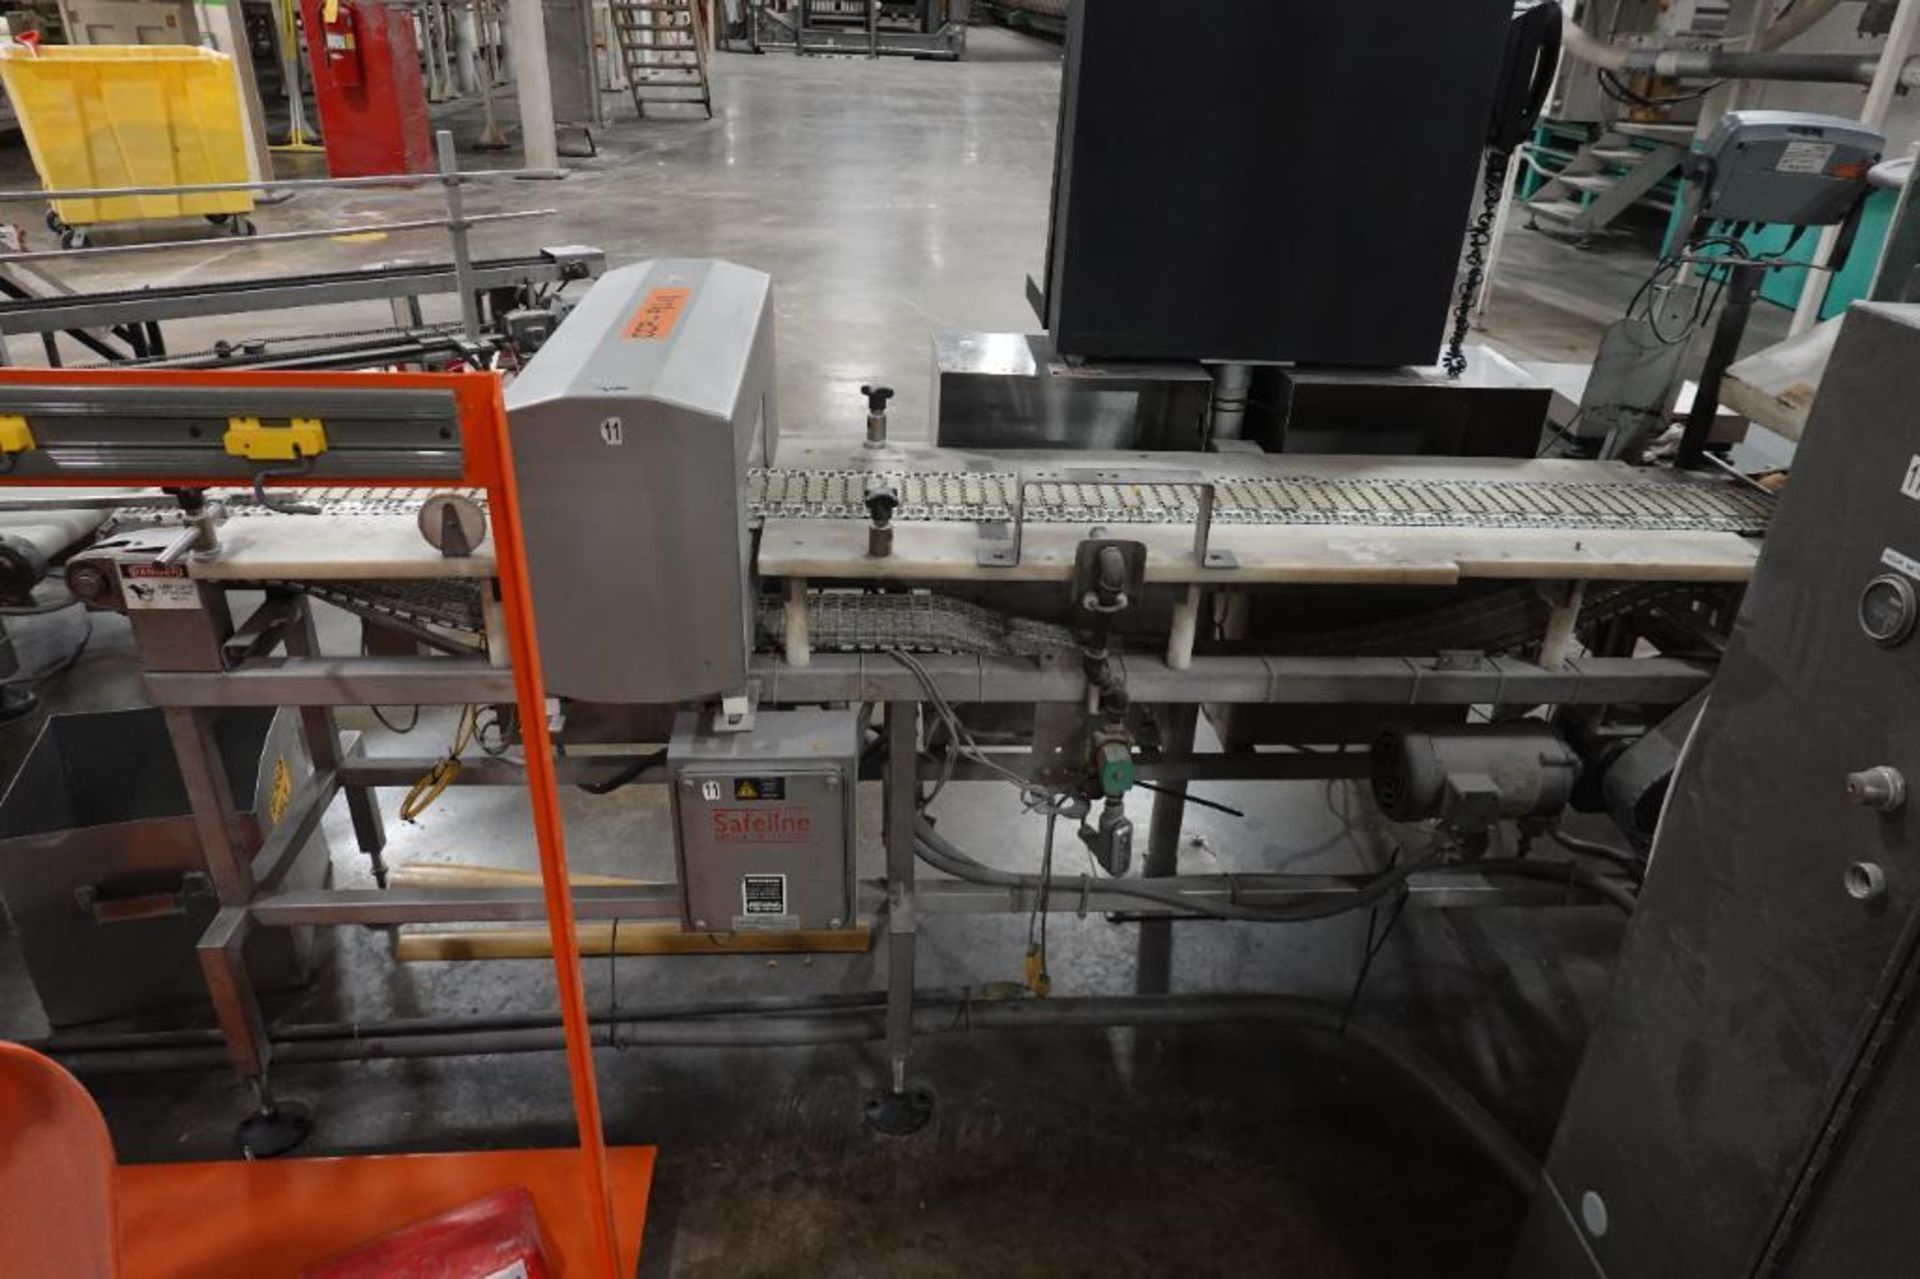 Safeline metal detector with conveyor - Image 9 of 12